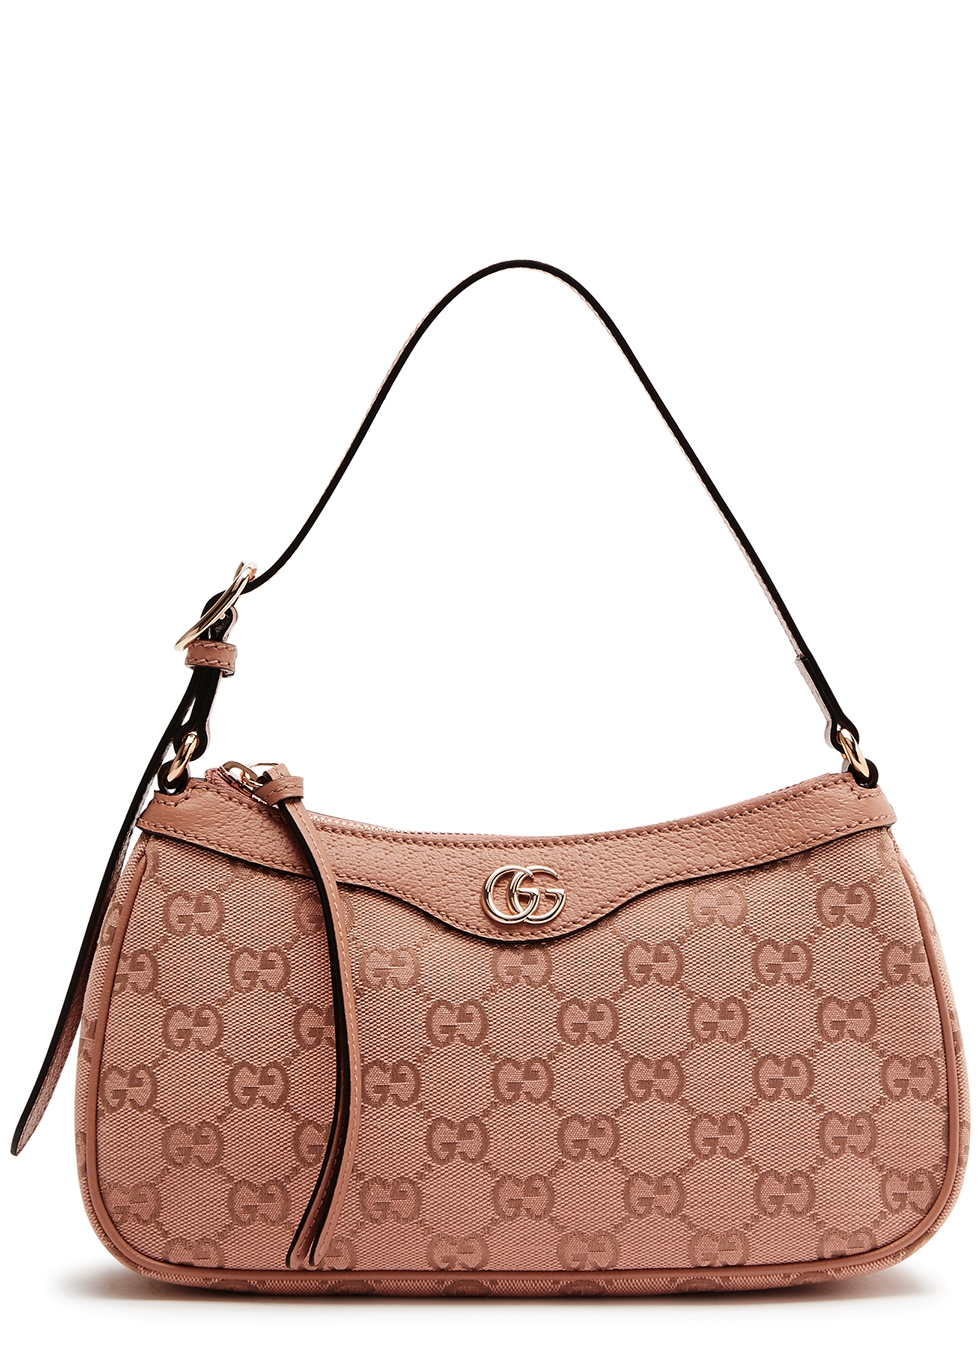 Buy Gucci Bags & Handbags online - Women - 455 products | FASHIOLA.in